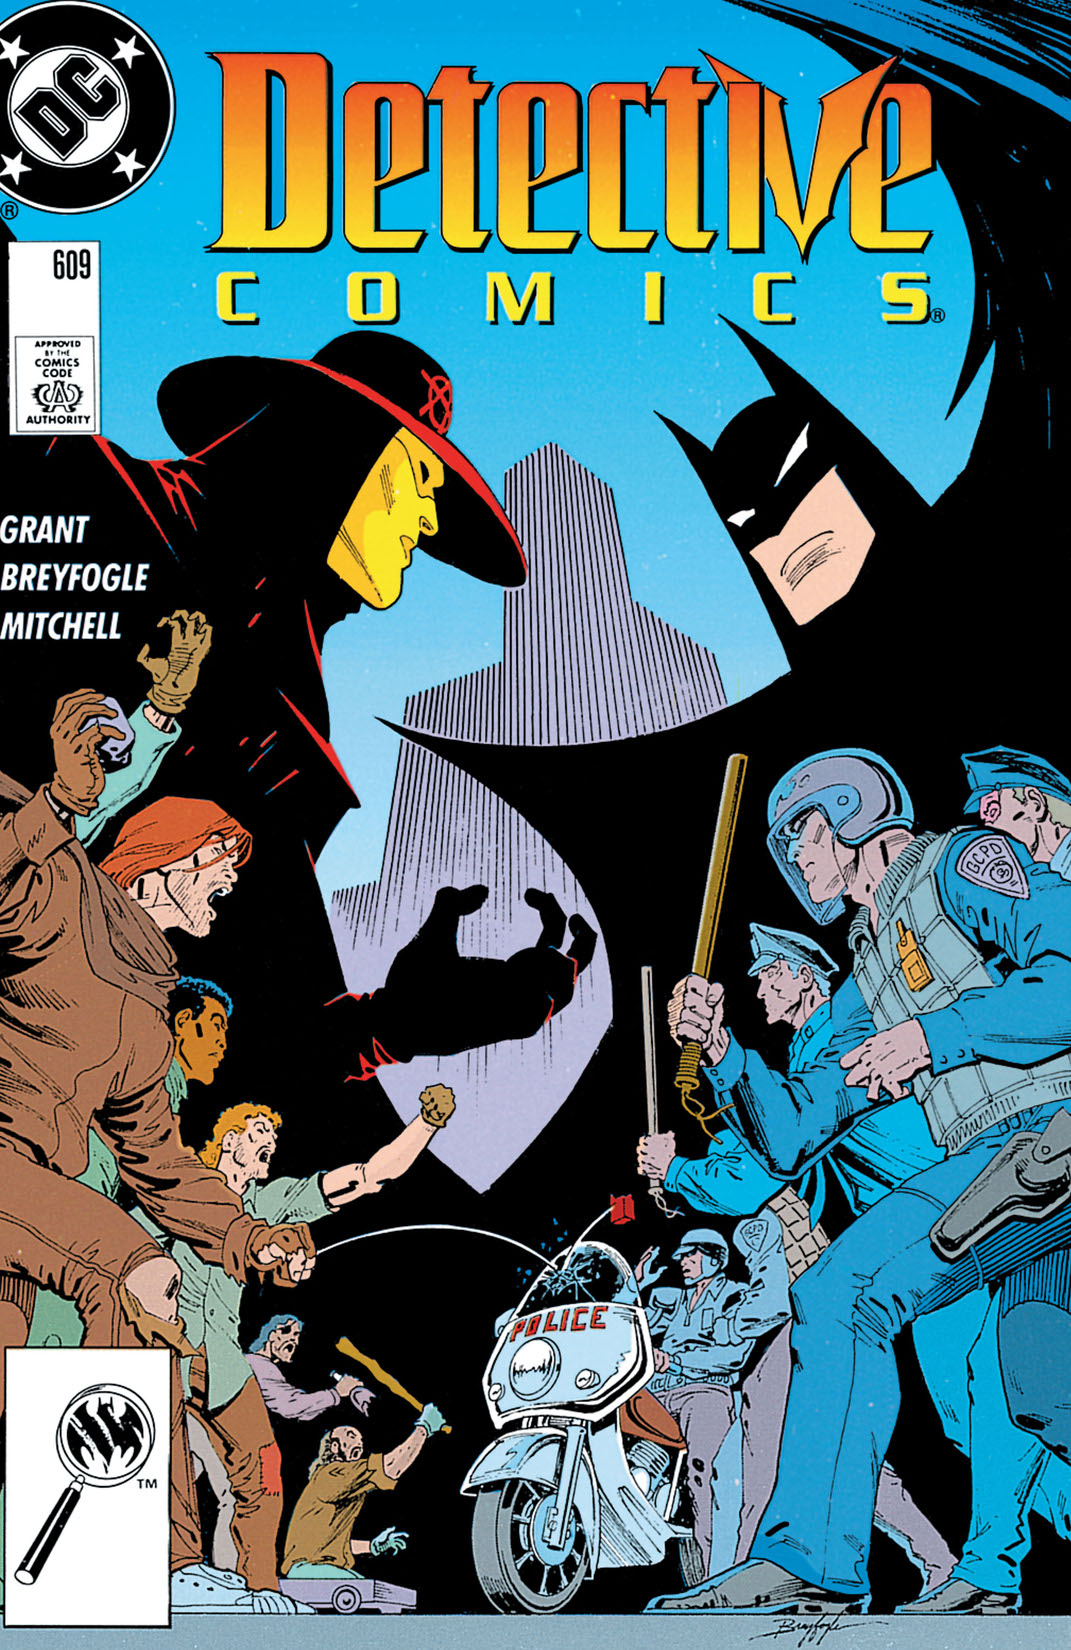 Detective Comics (1937-) #609 preview images